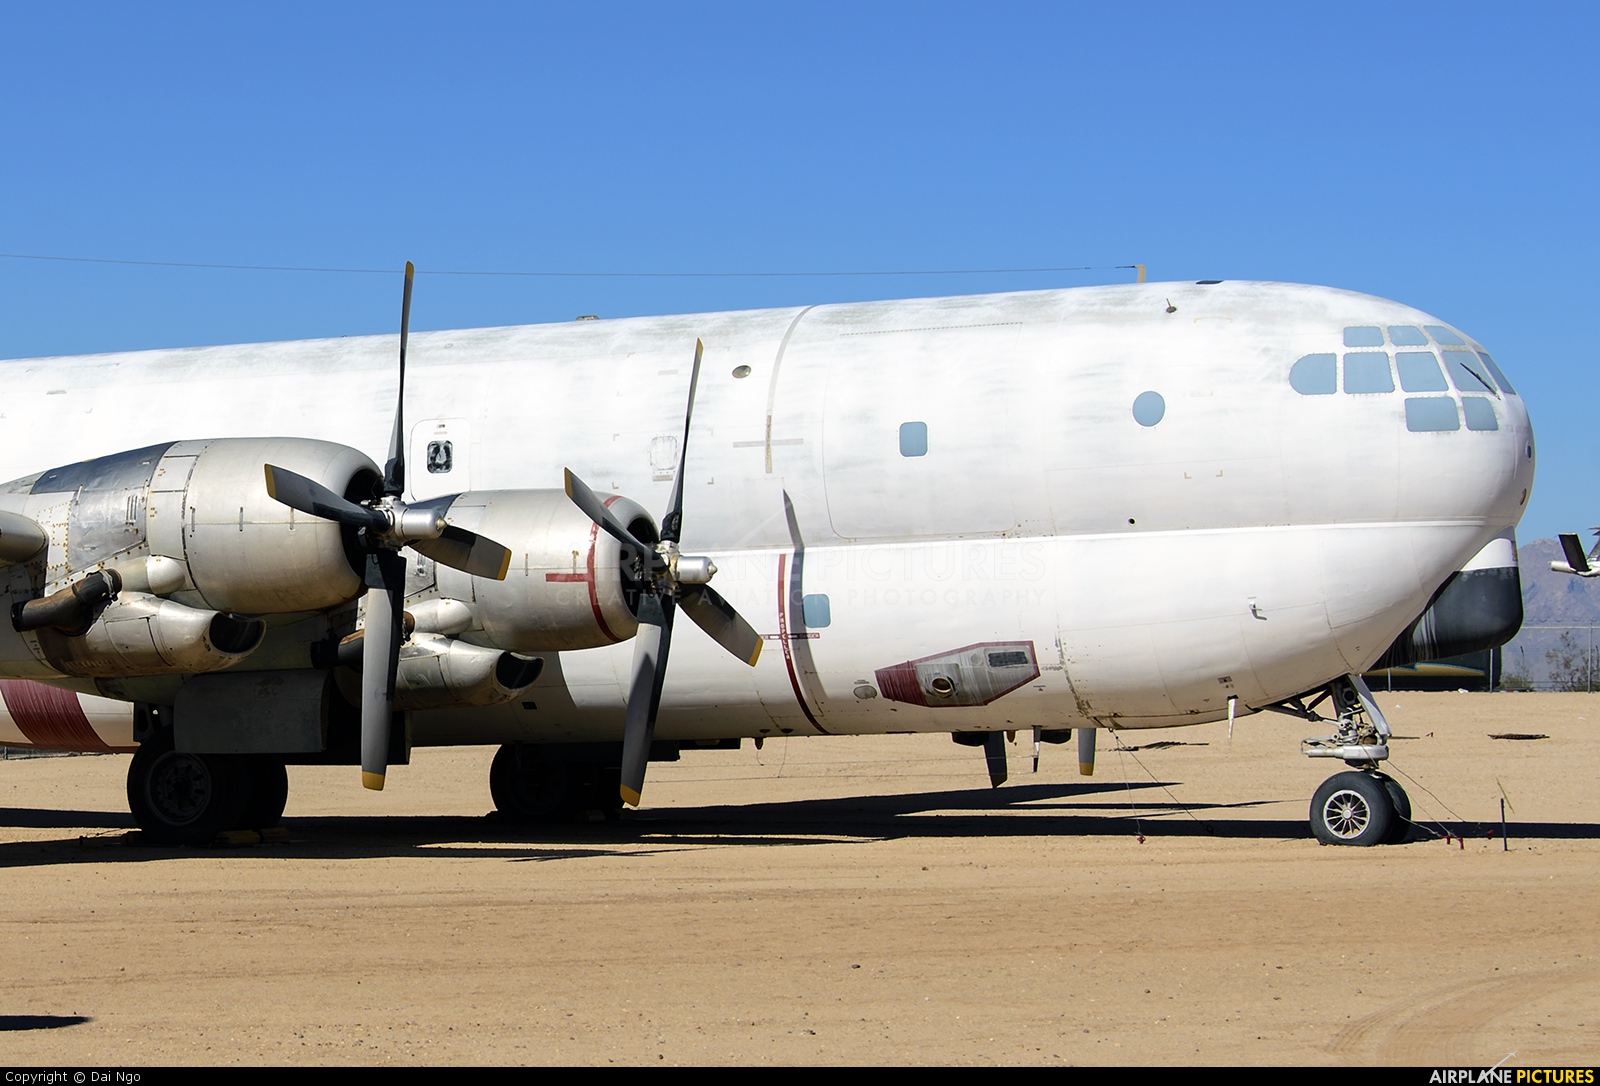 Balair HB-ILY aircraft at Tucson - Pima Air & Space Museum